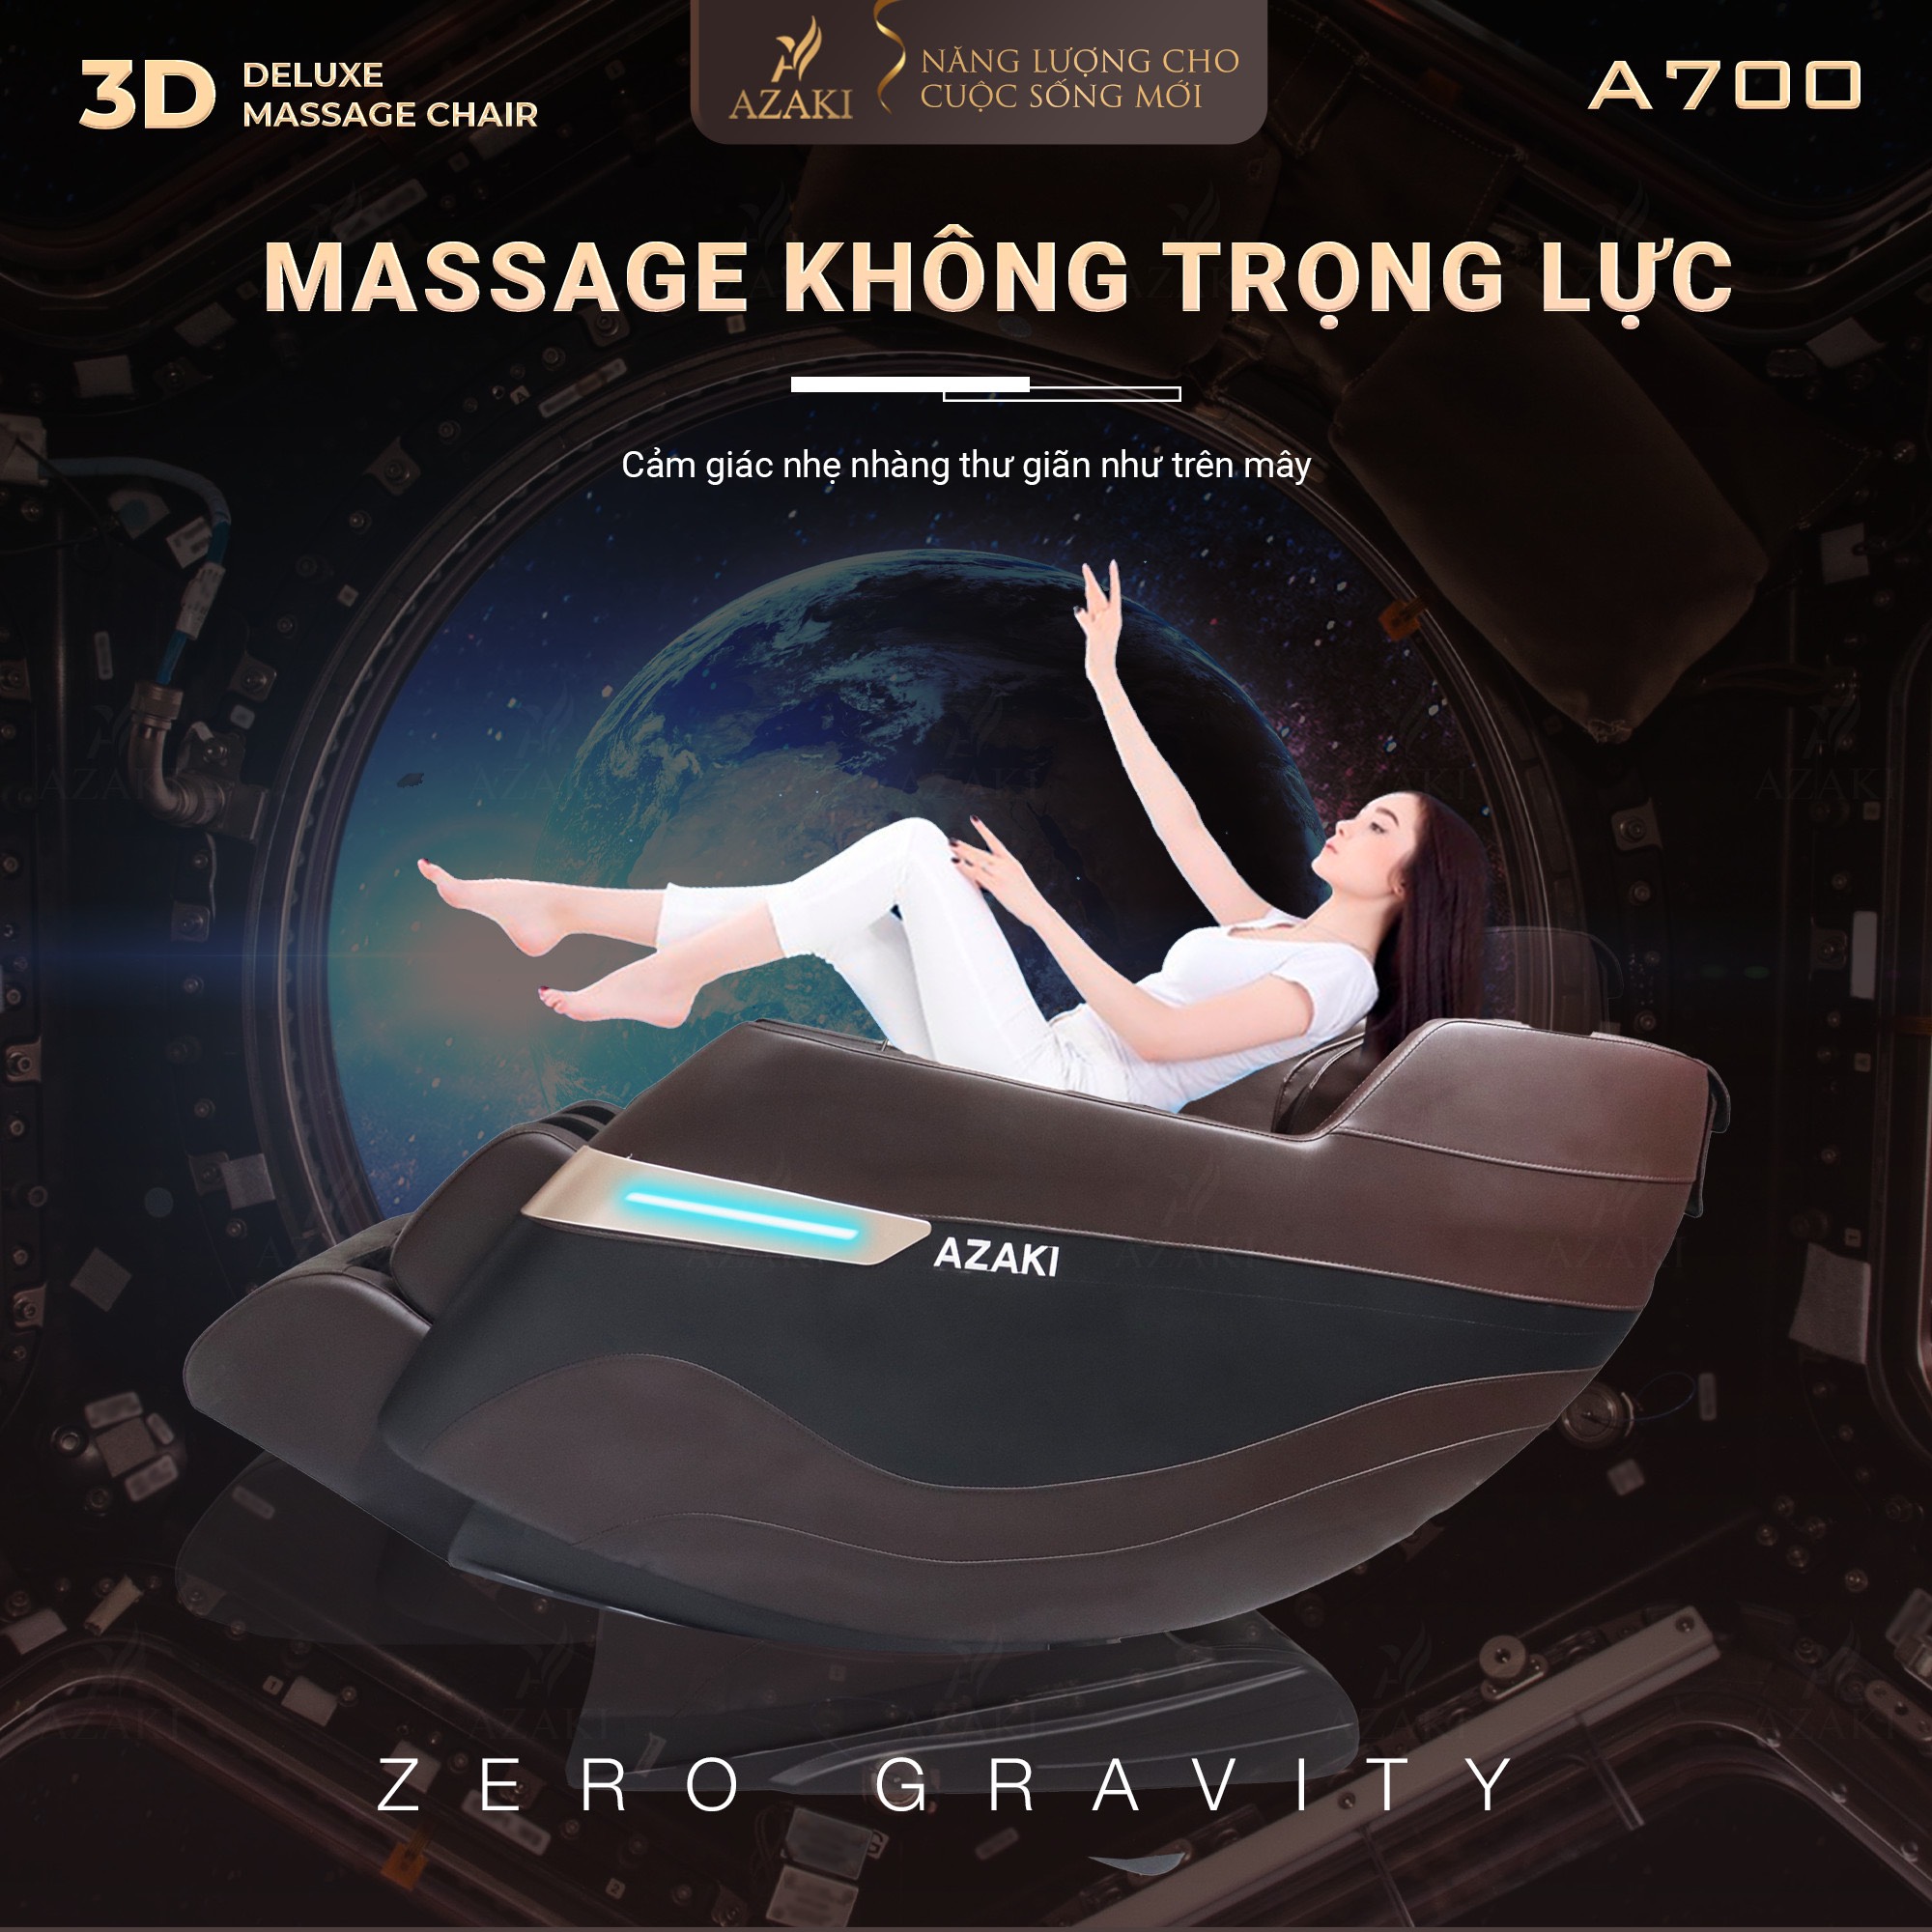 Ghế Massage Toàn Thân Cao Cấp 3D AZAKI A700